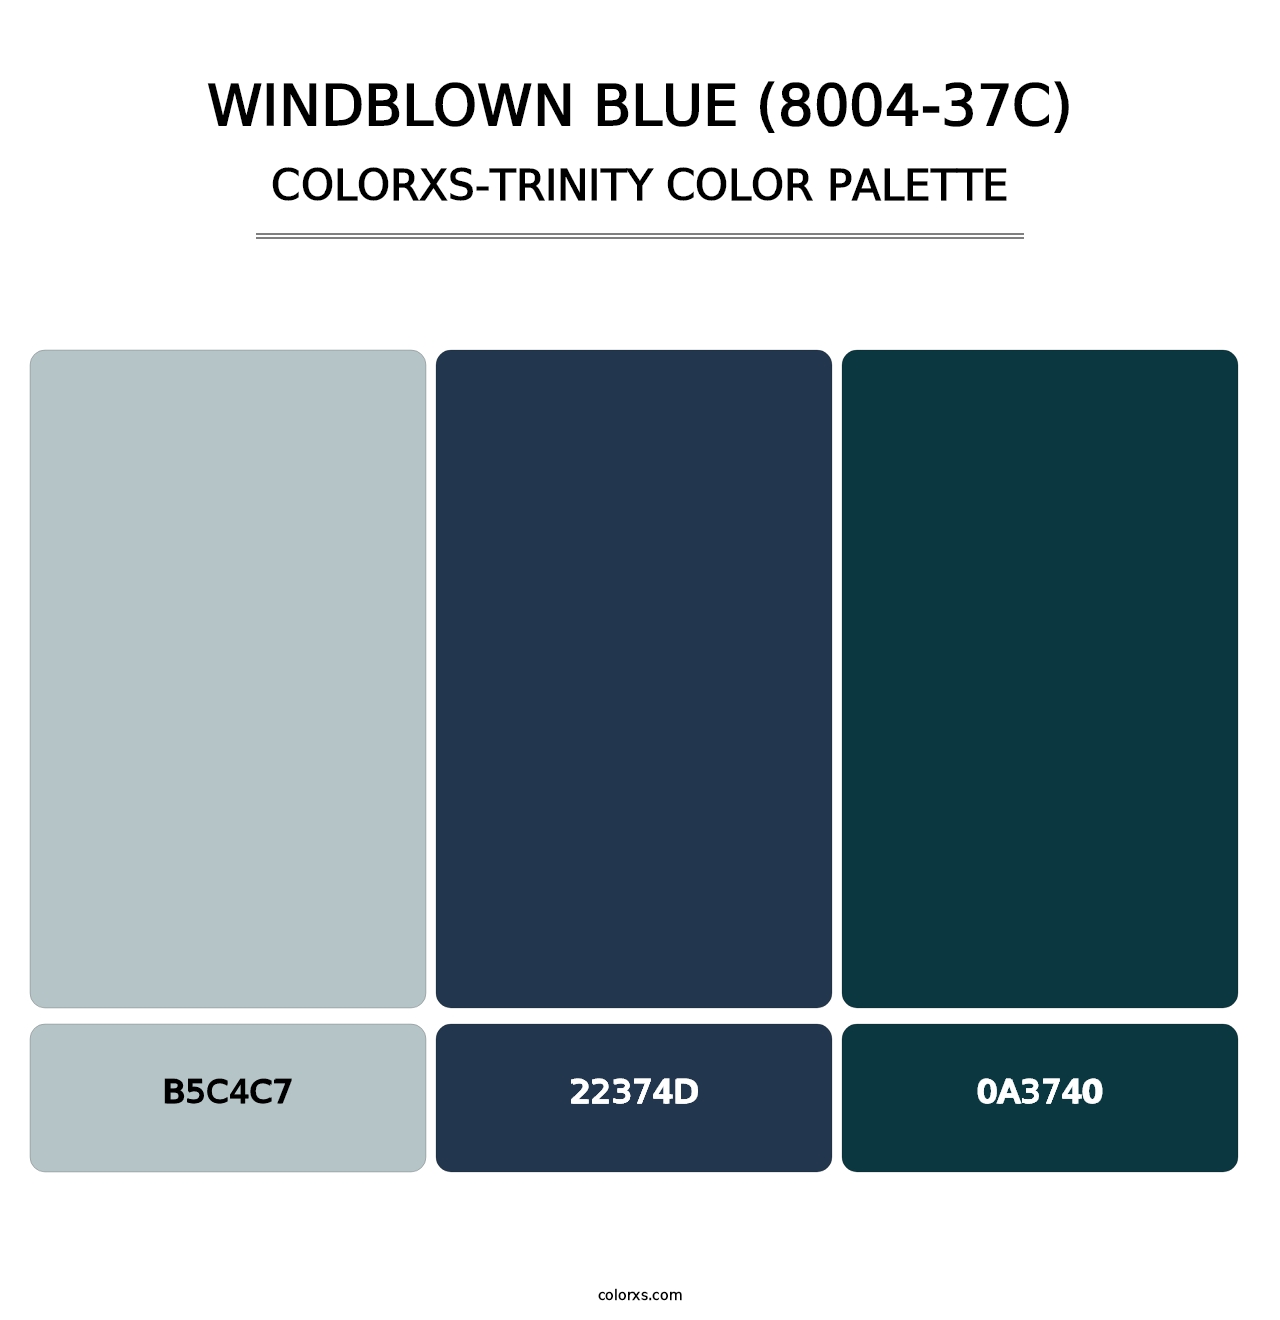 Windblown Blue (8004-37C) - Colorxs Trinity Palette